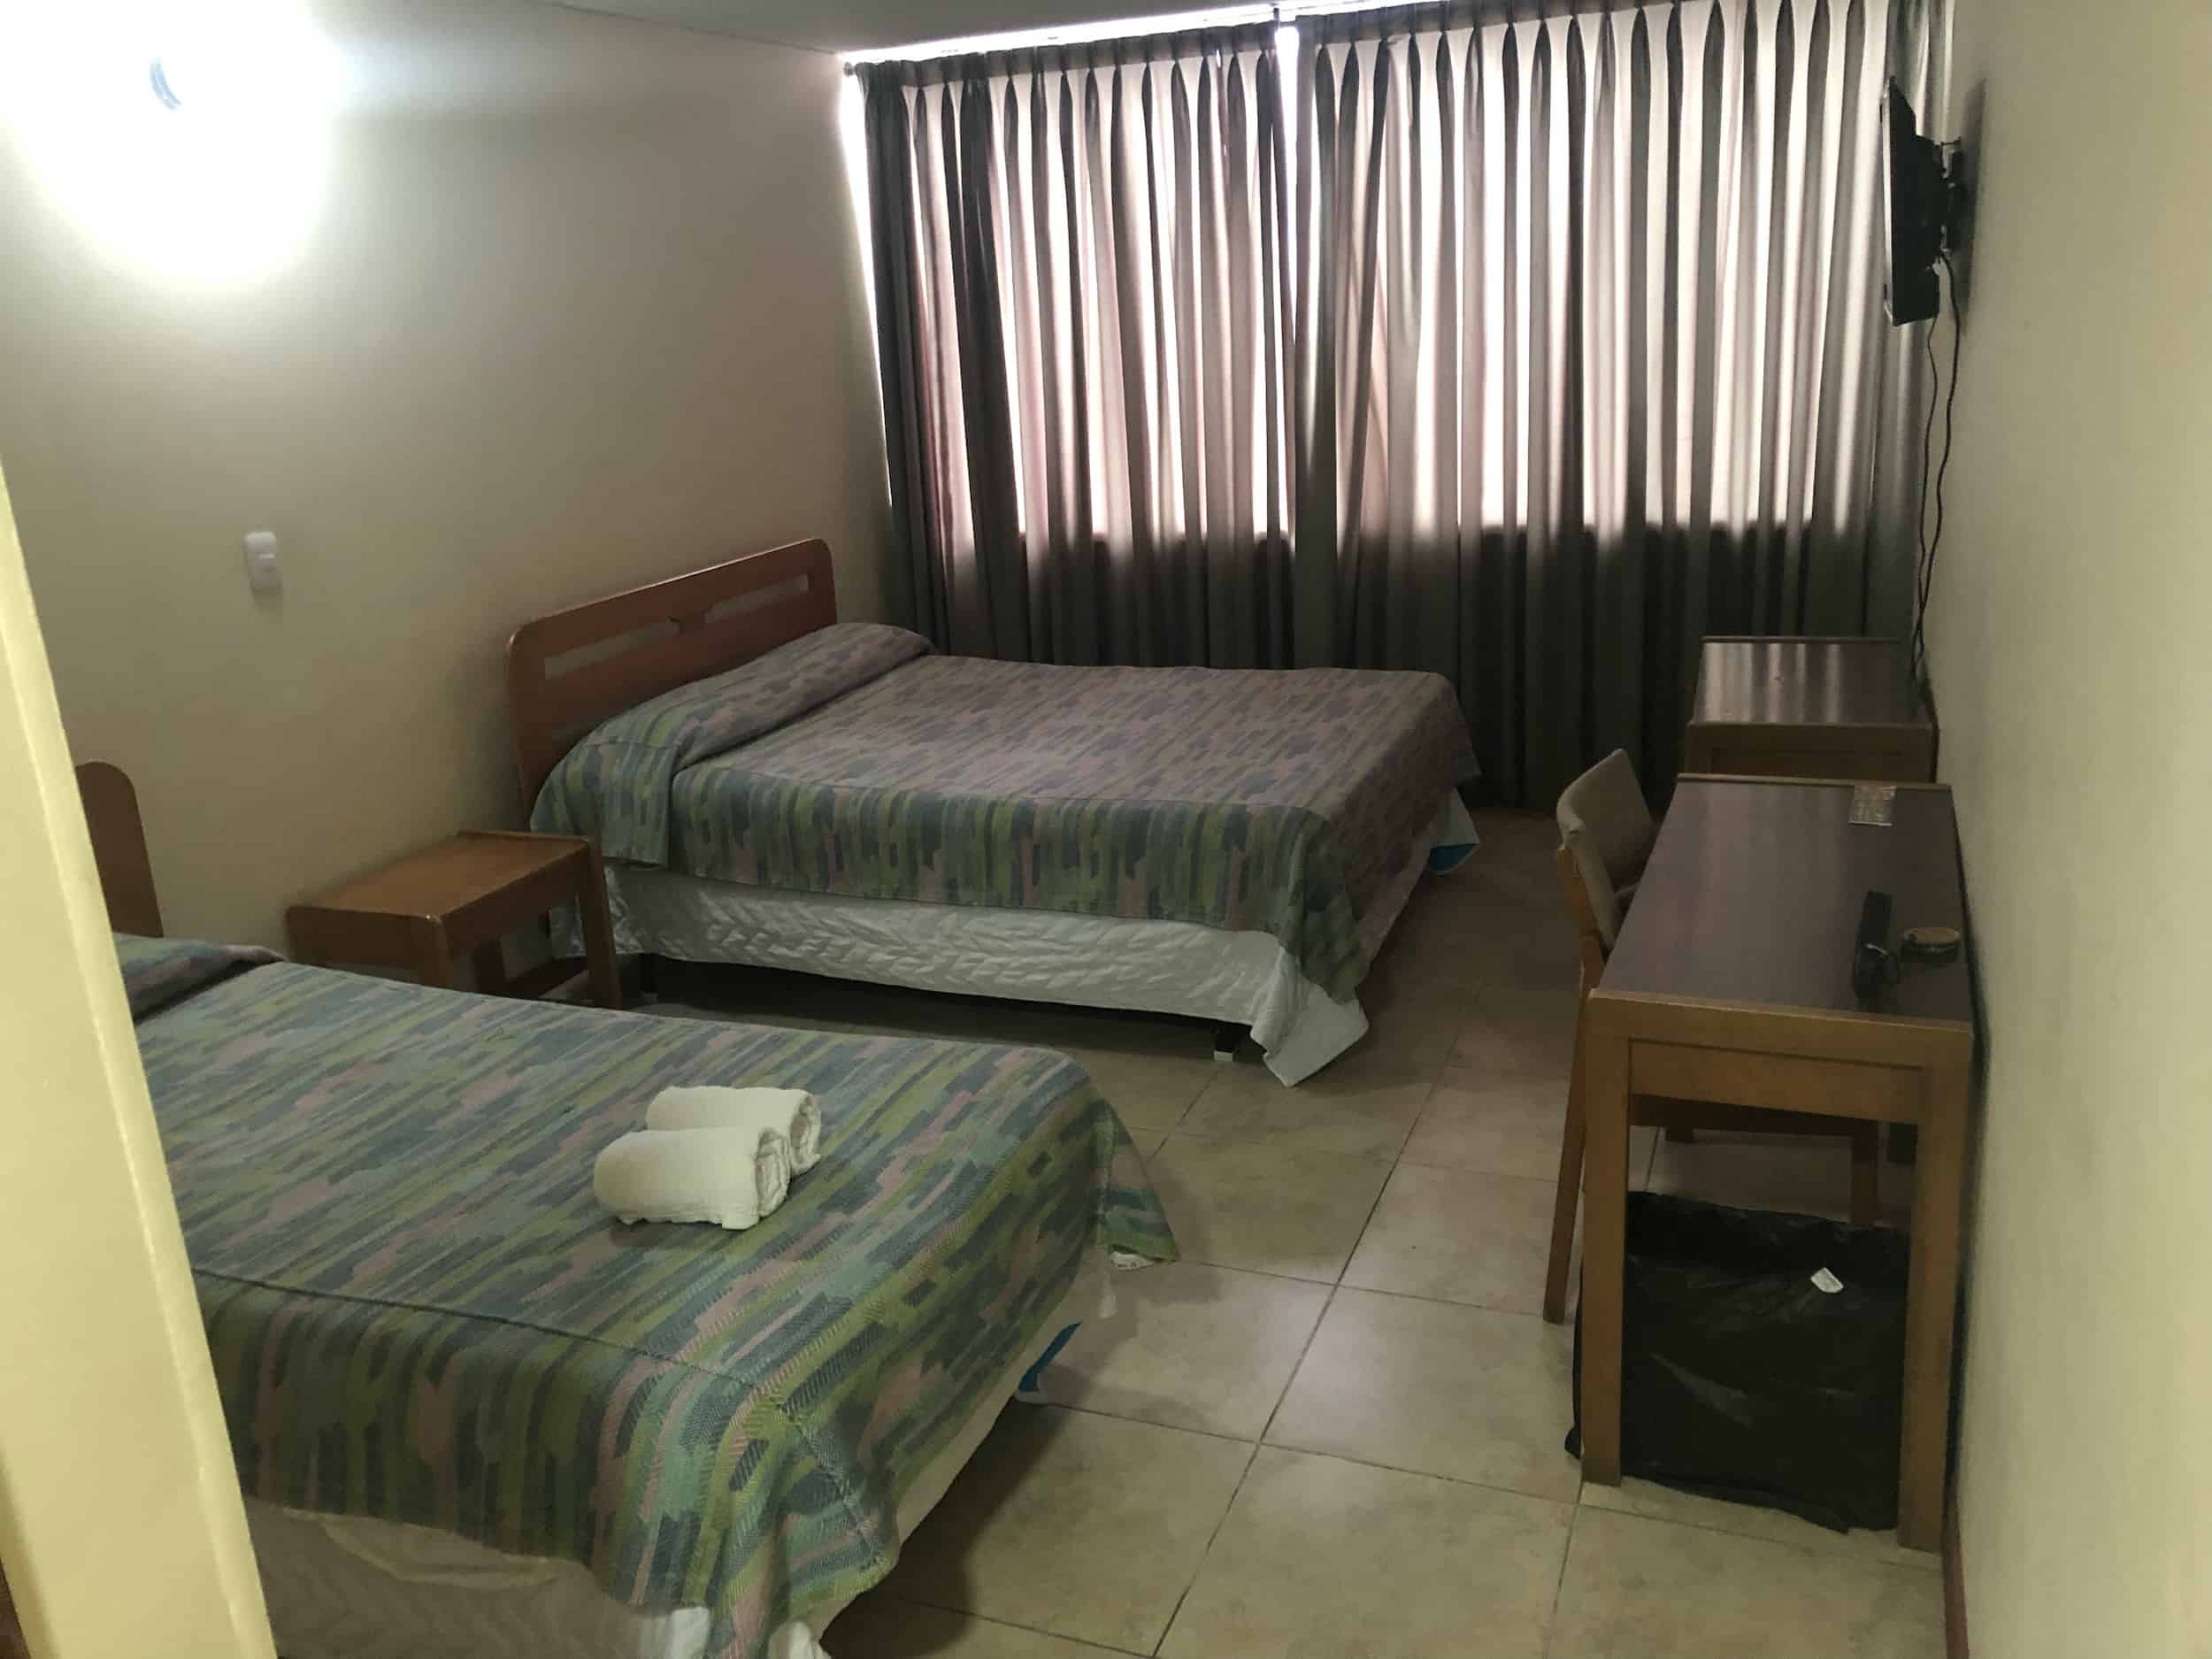 Room at Hotel Sevilla in Sevilla, Valle del Cauca, Colombia